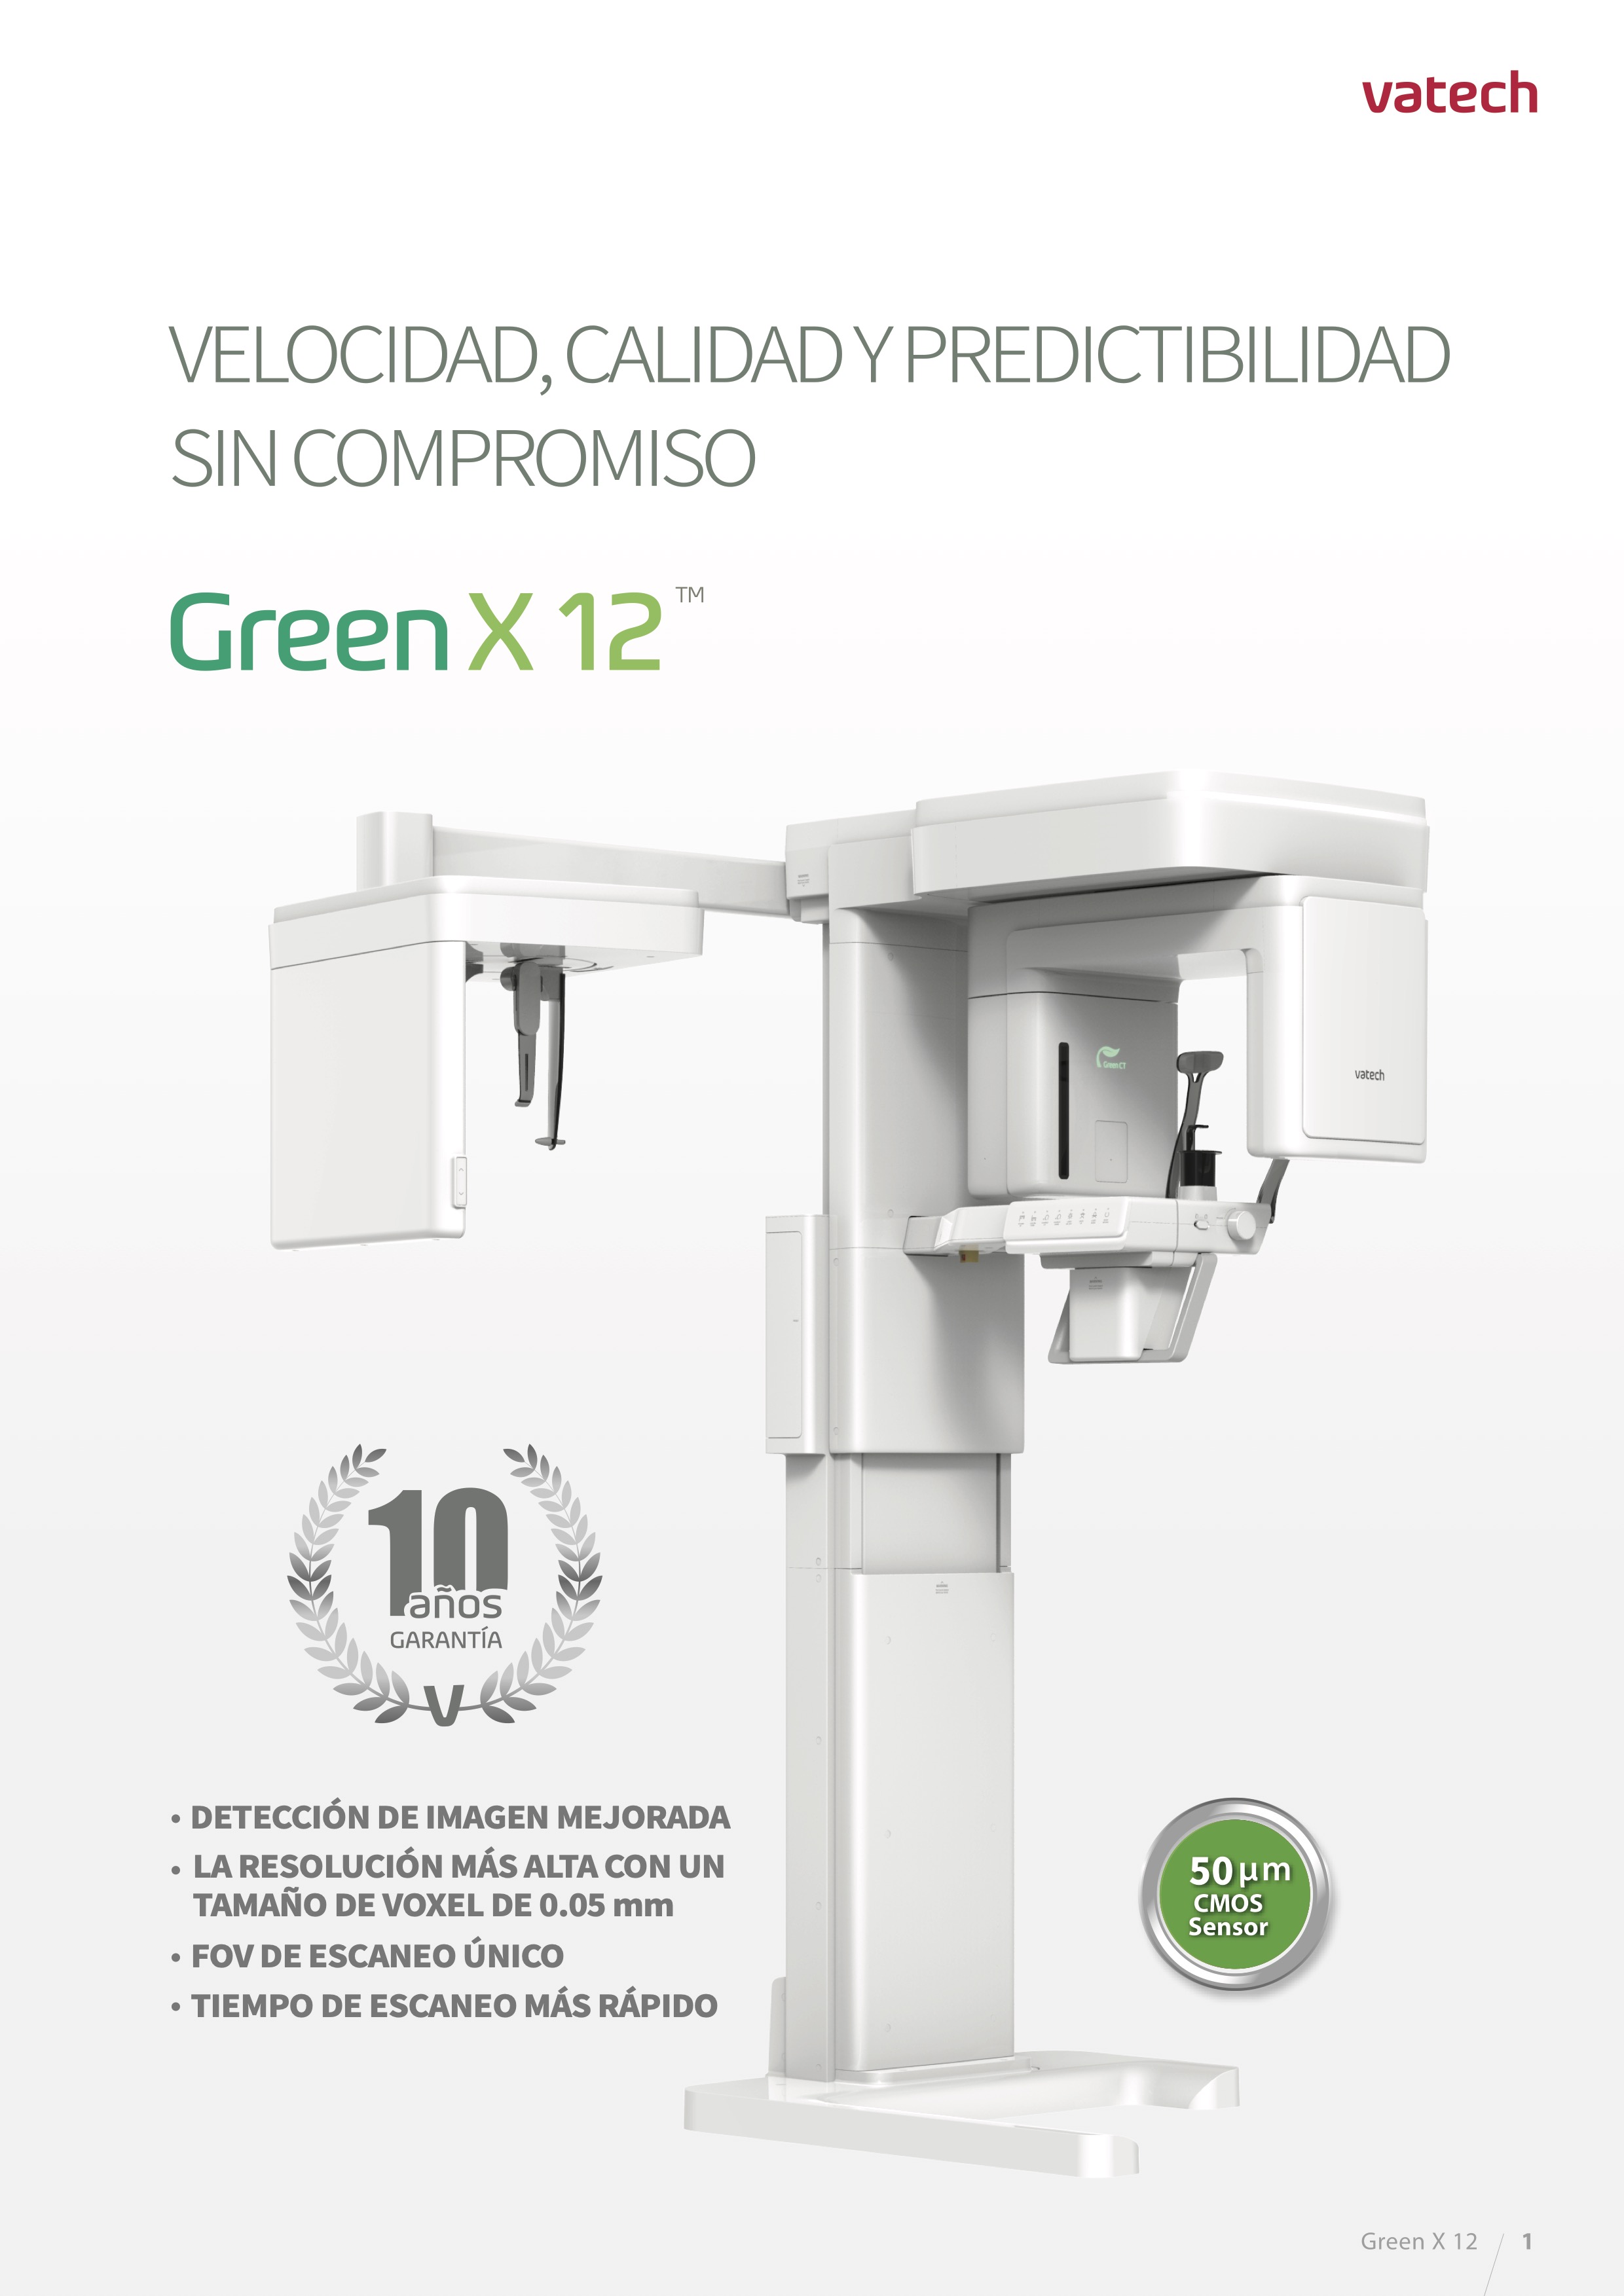 Tomógrafo Dental Vatech Green X12 - Catálogo 1